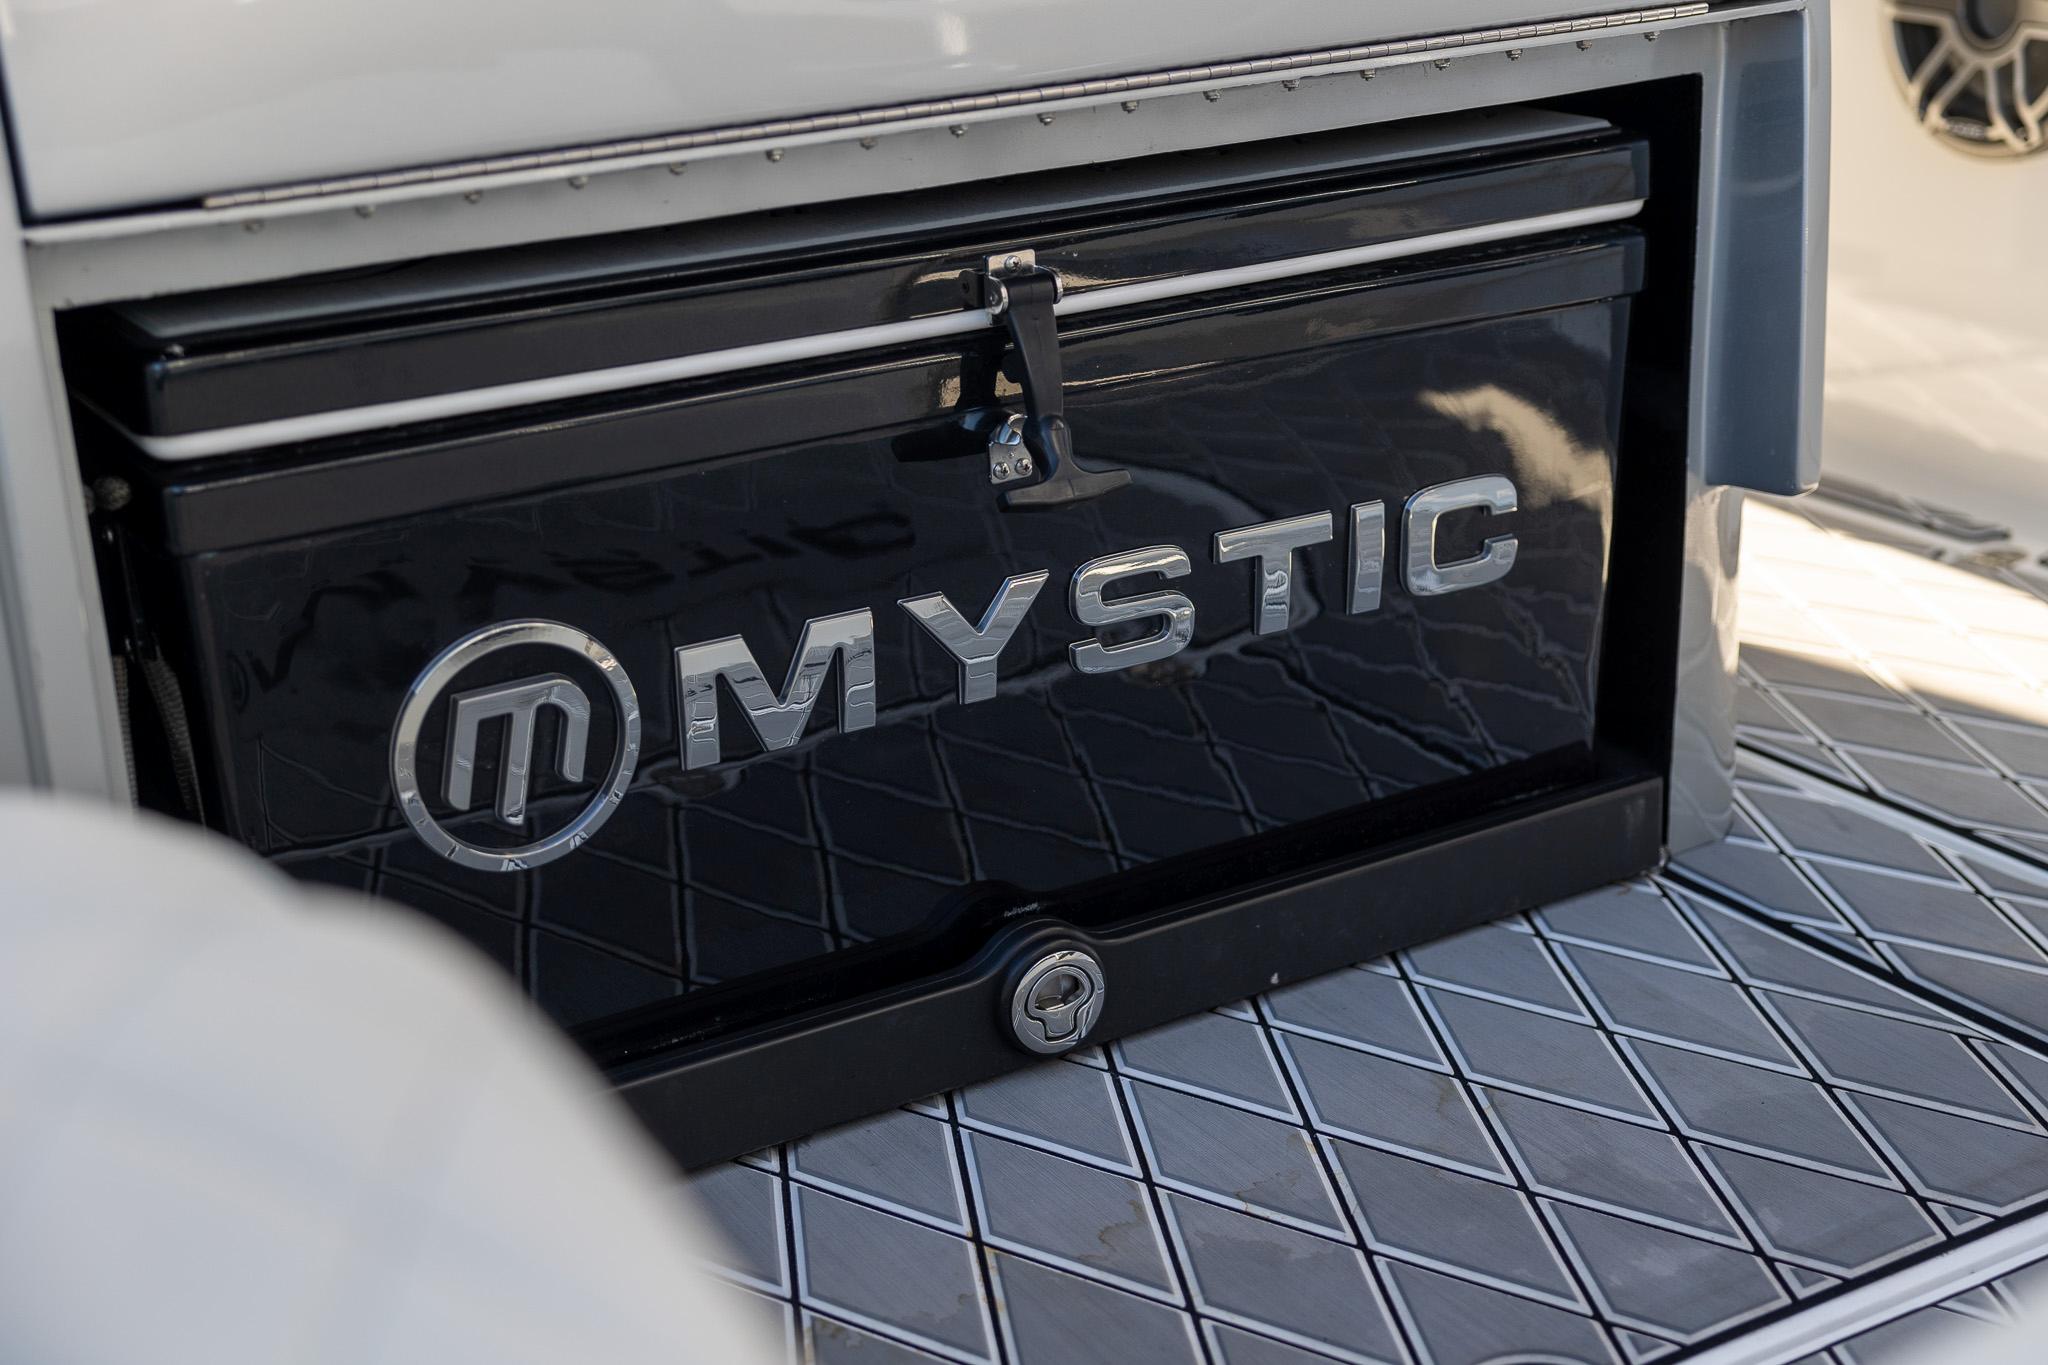 2019 Mystic Powerboats M4200